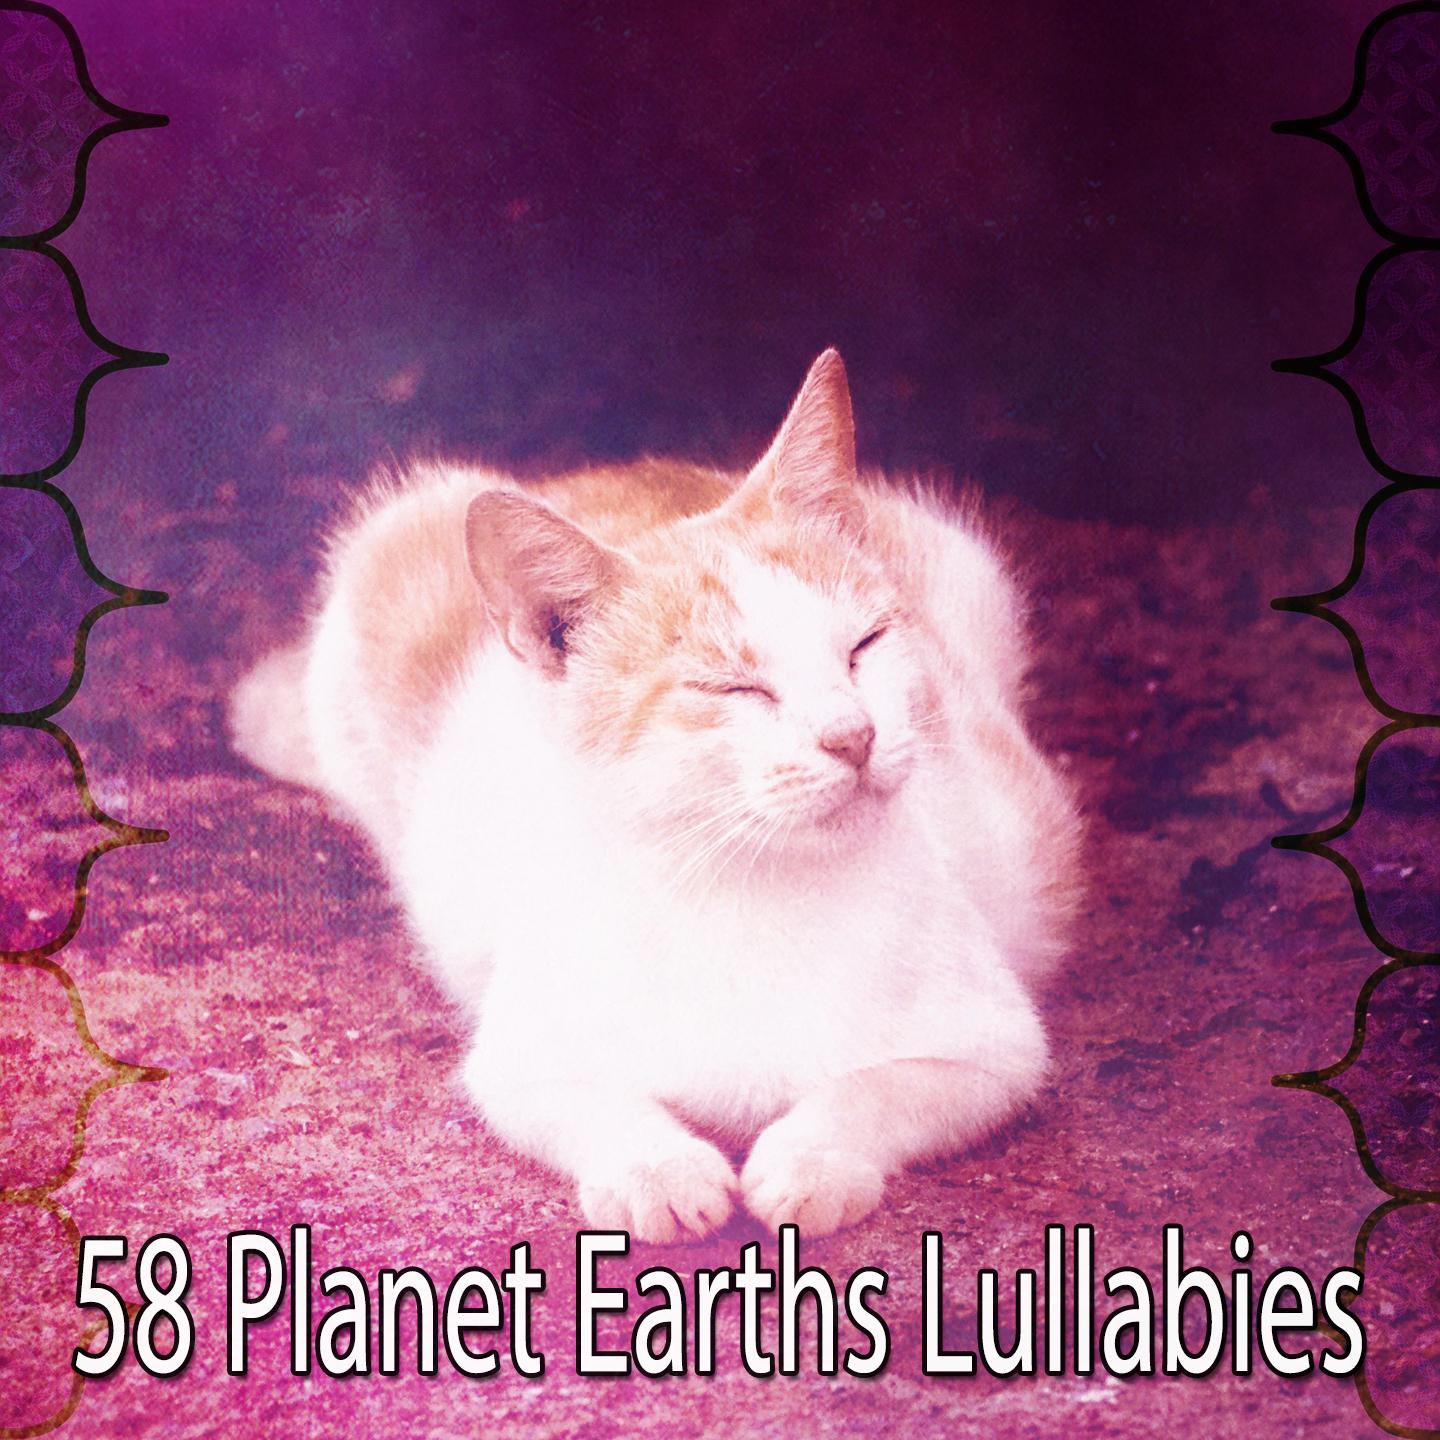 58 Planet Earths Lullabies